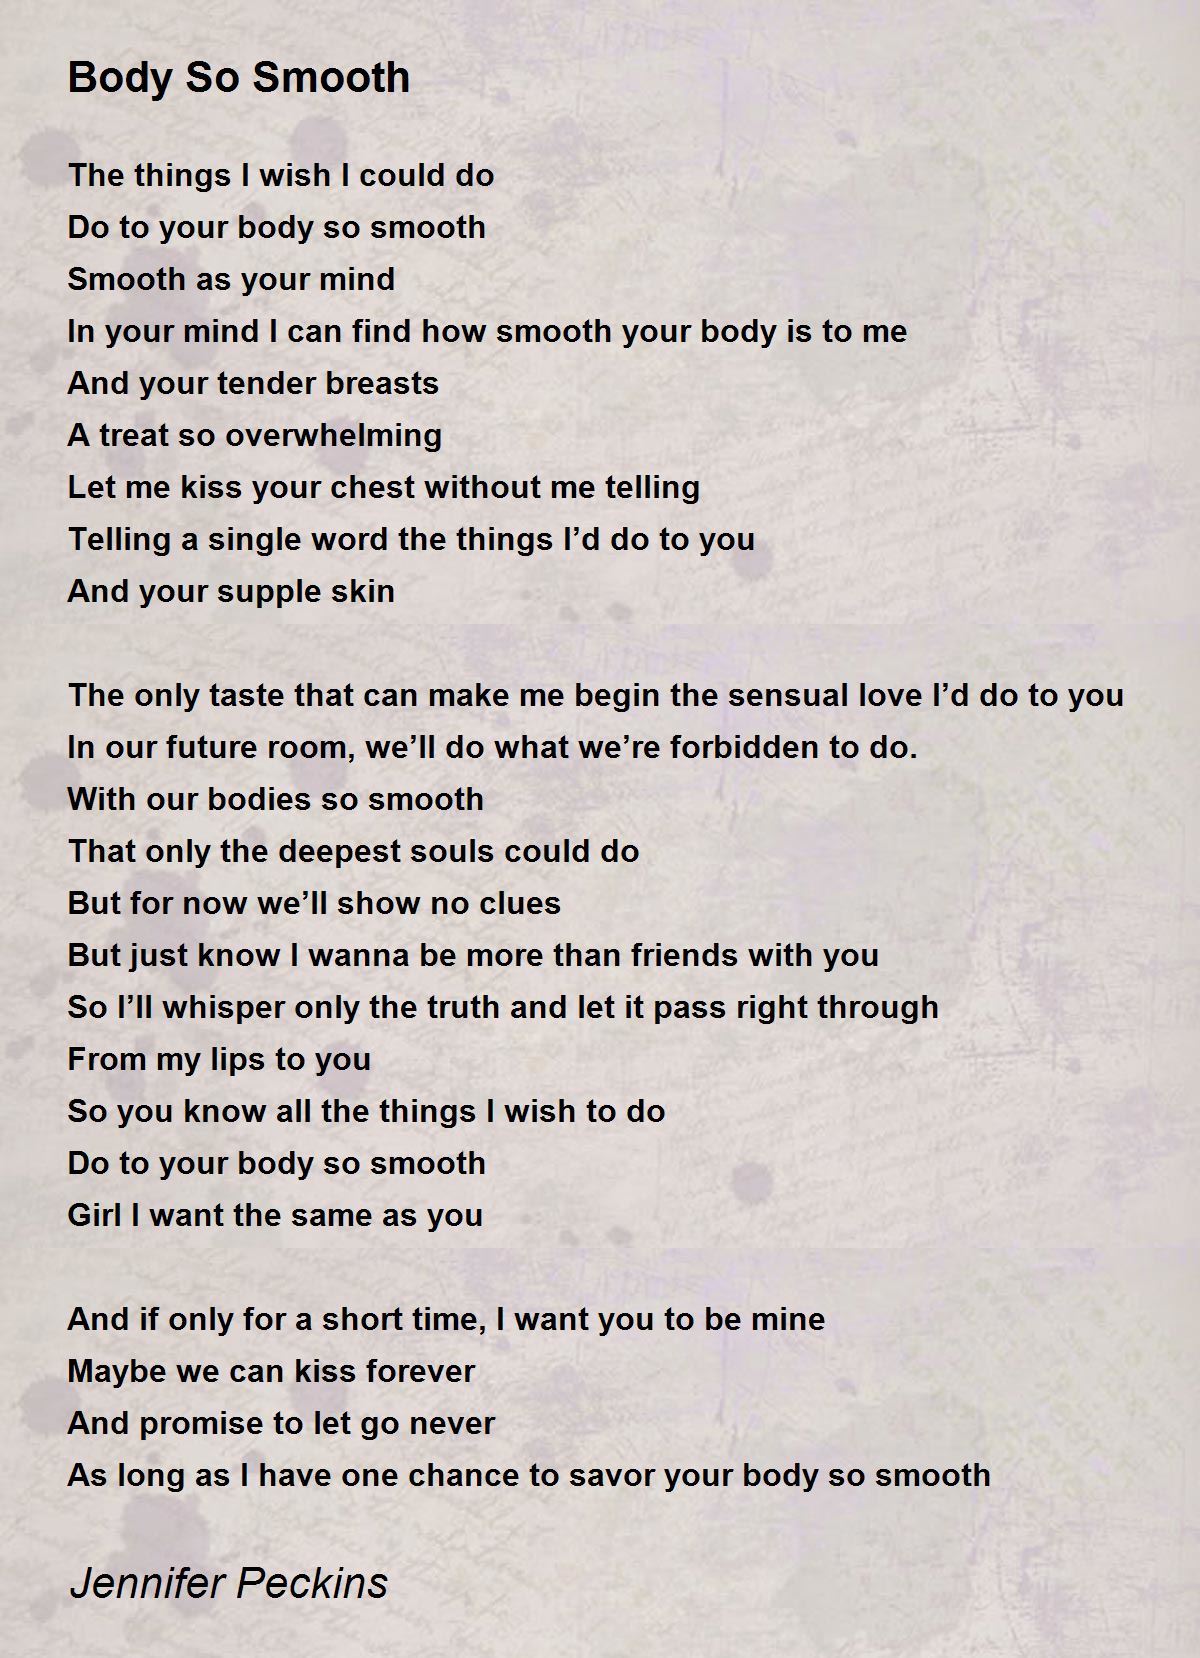 Body So Smooth - Body So Smooth Poem by Jennifer Peckins